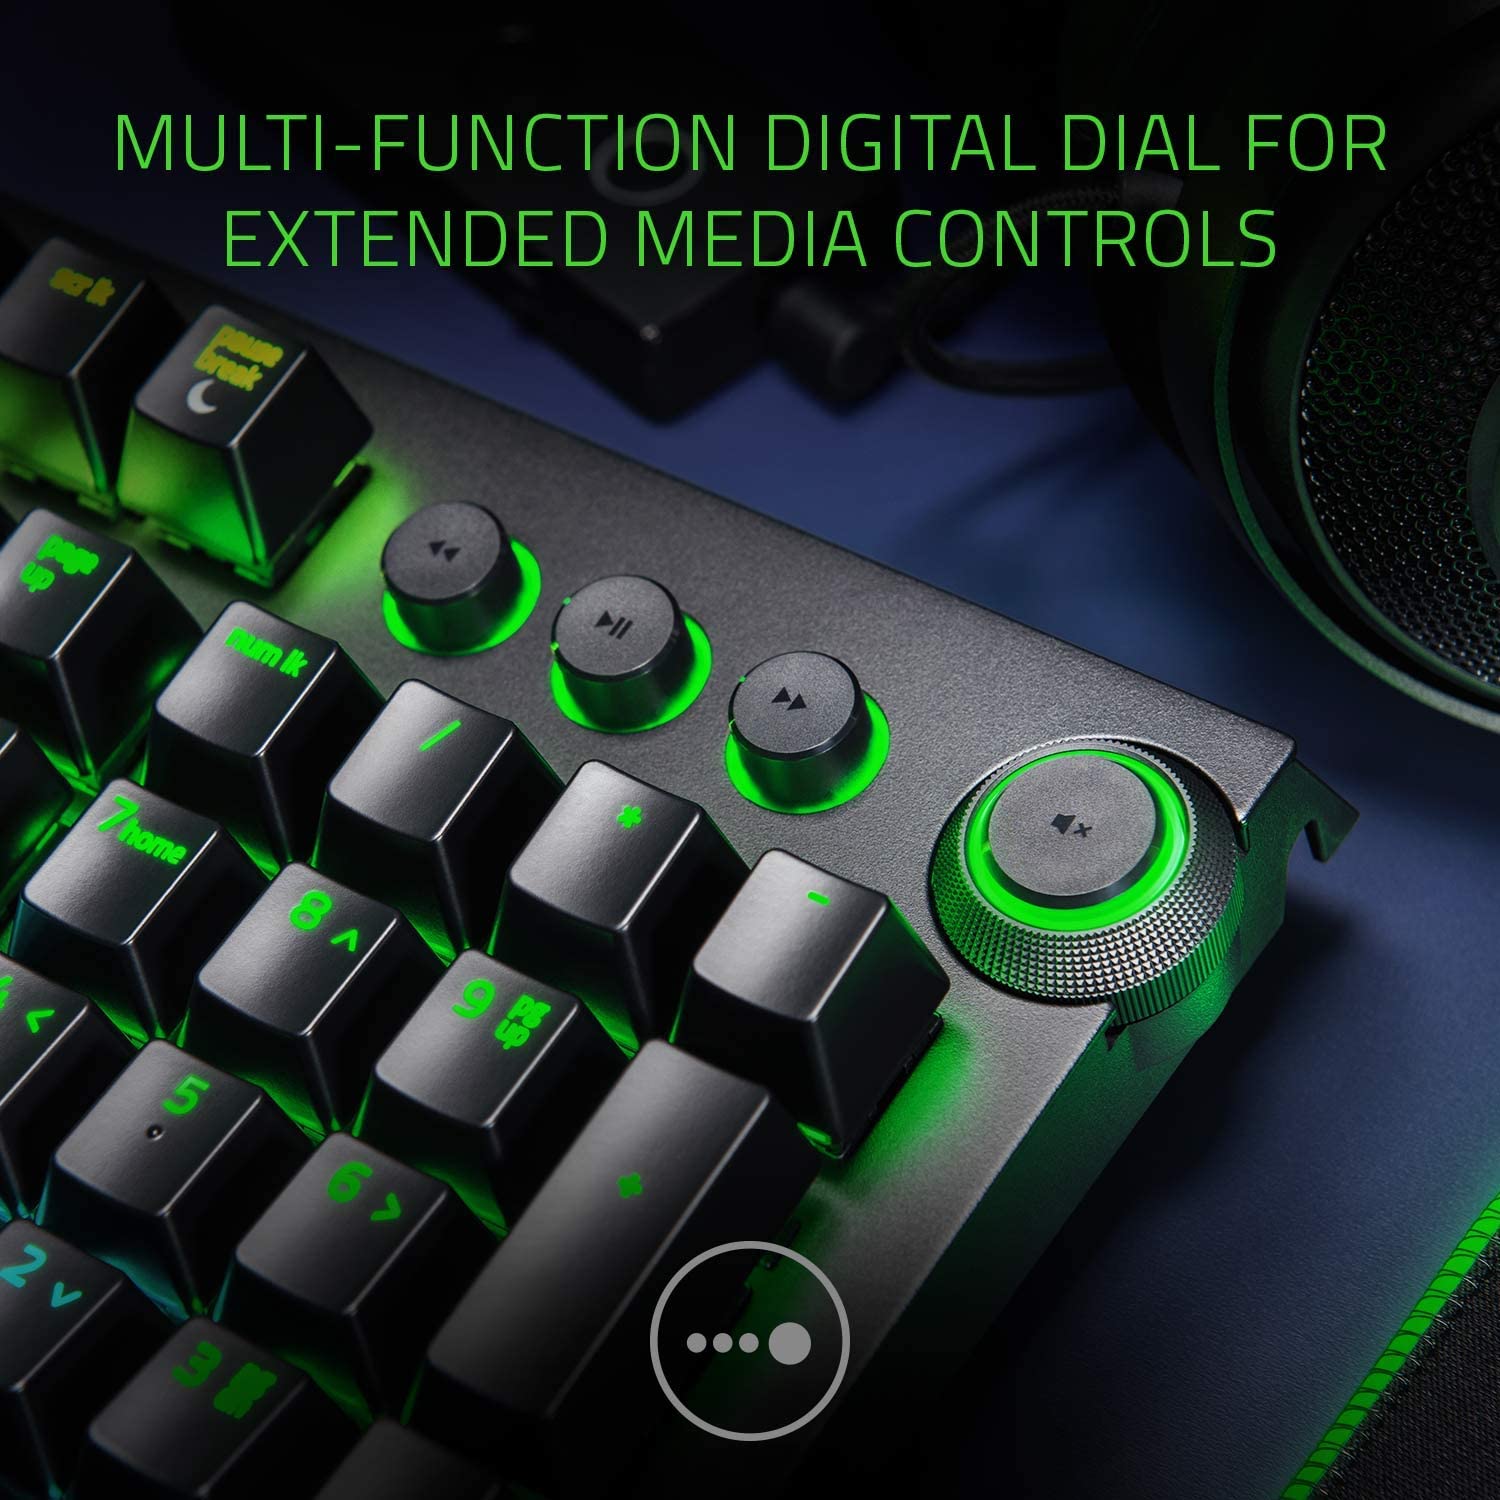 Razer Blackwidow Elite USB Mechanical Gaming Keyboard UK Layout - Green Switches